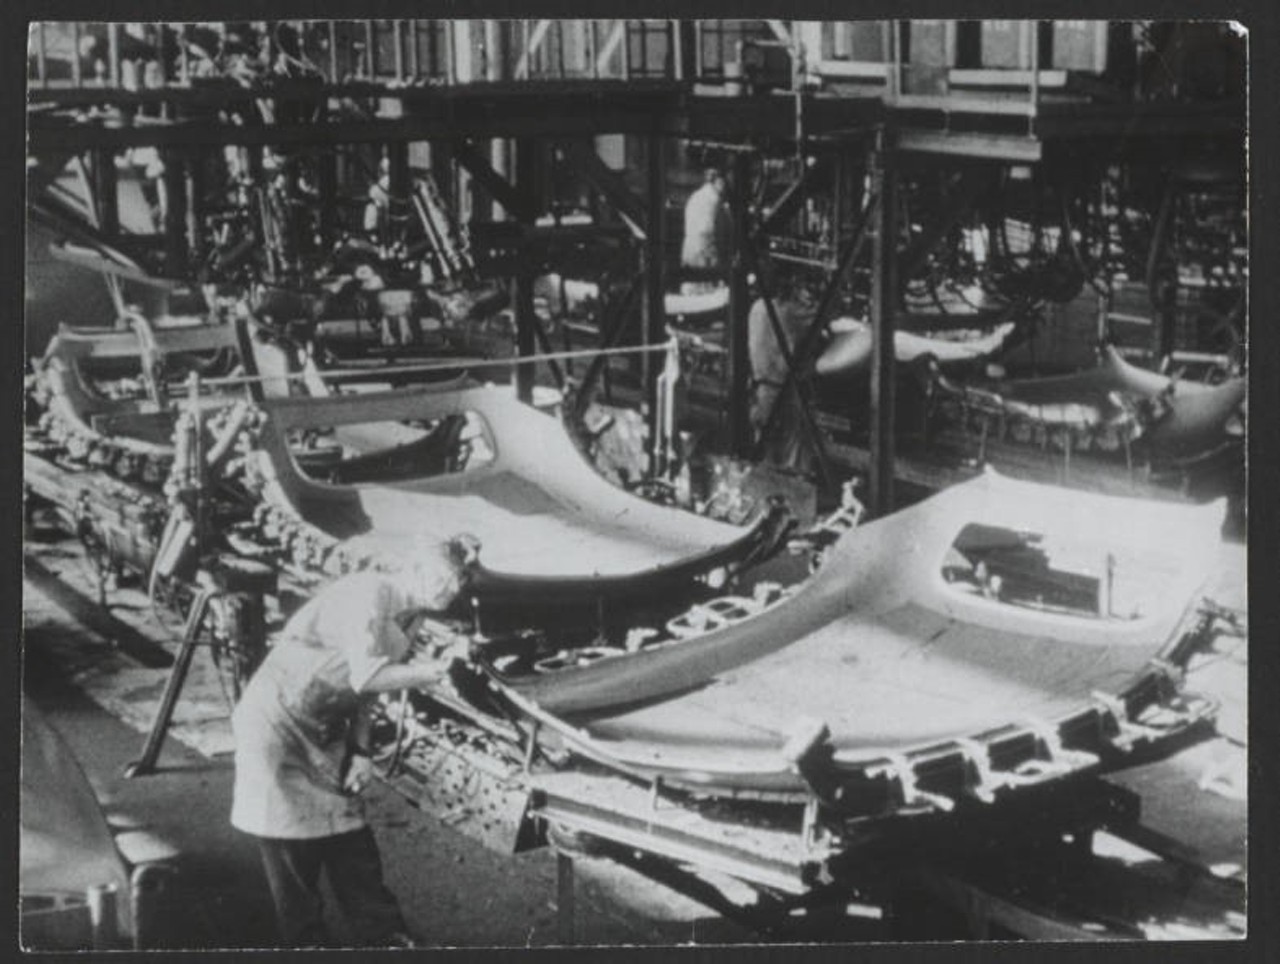 Automotive parts on the assembly line. c. 1935